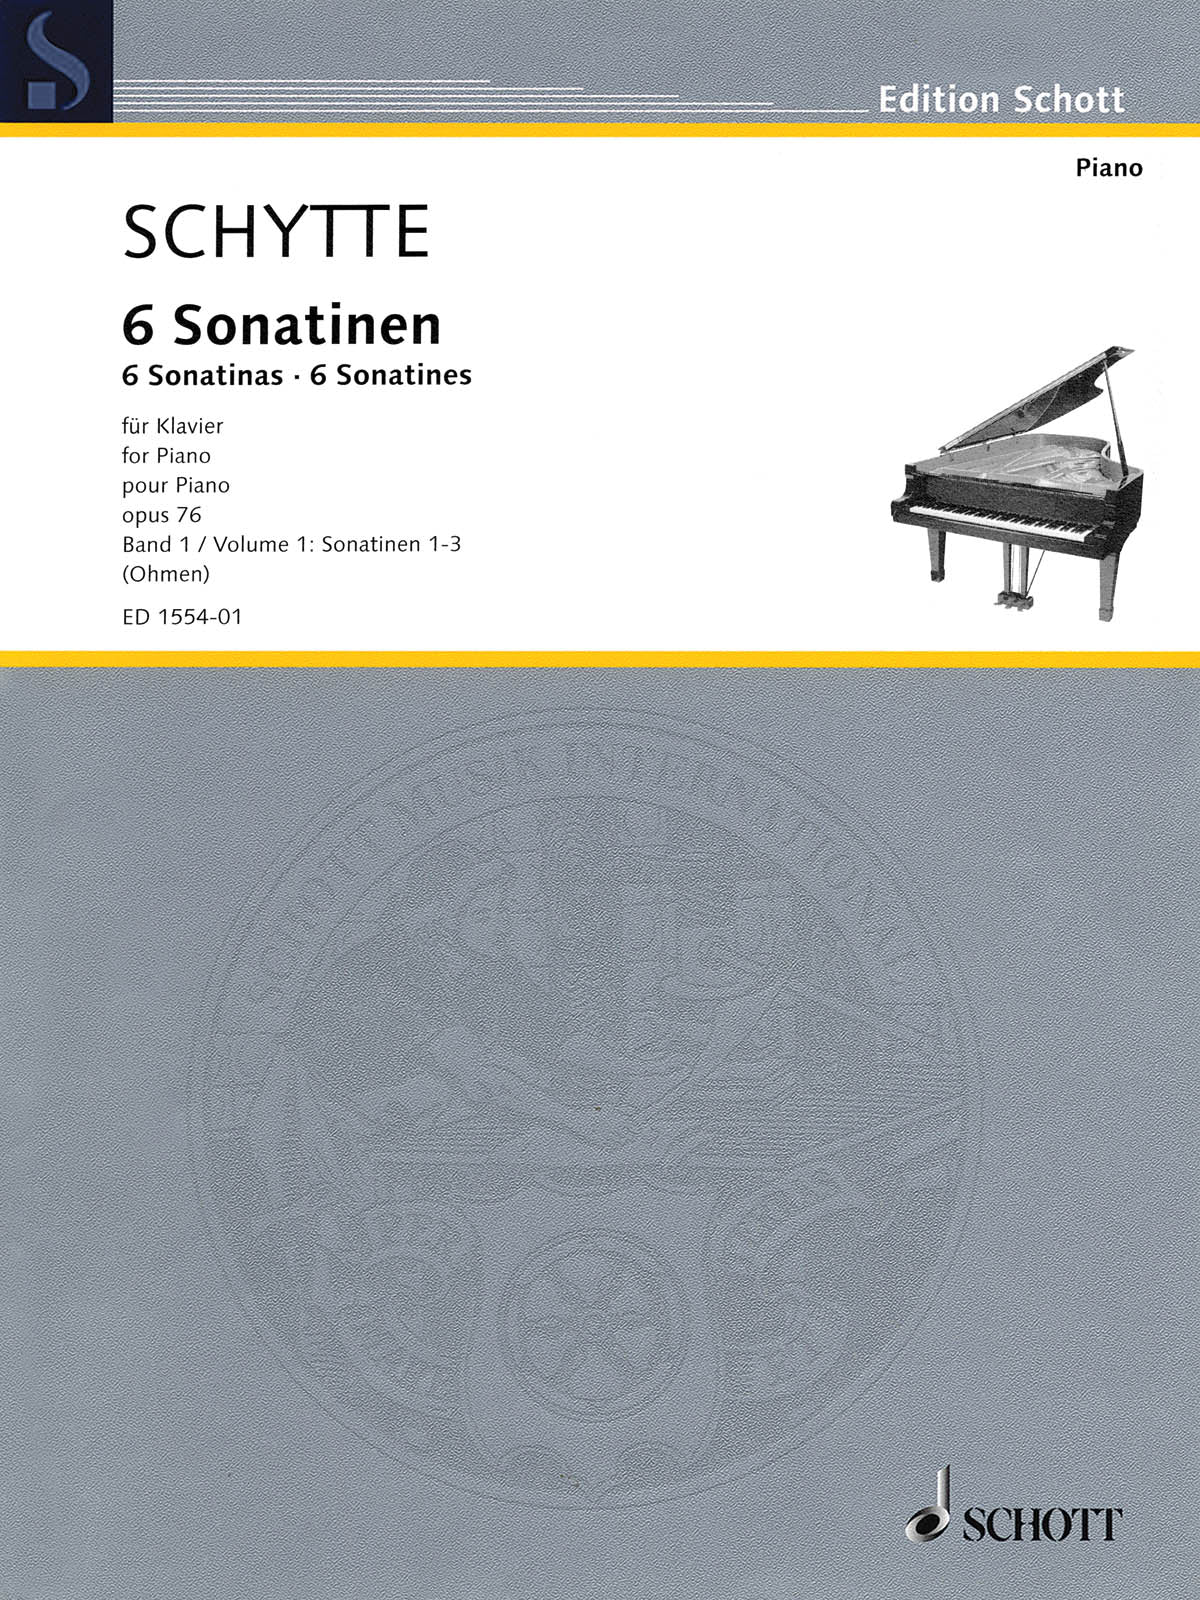 Schytte: 6 Sonatinas, Op. 76 - Volume 1 (Nos. 1-3)